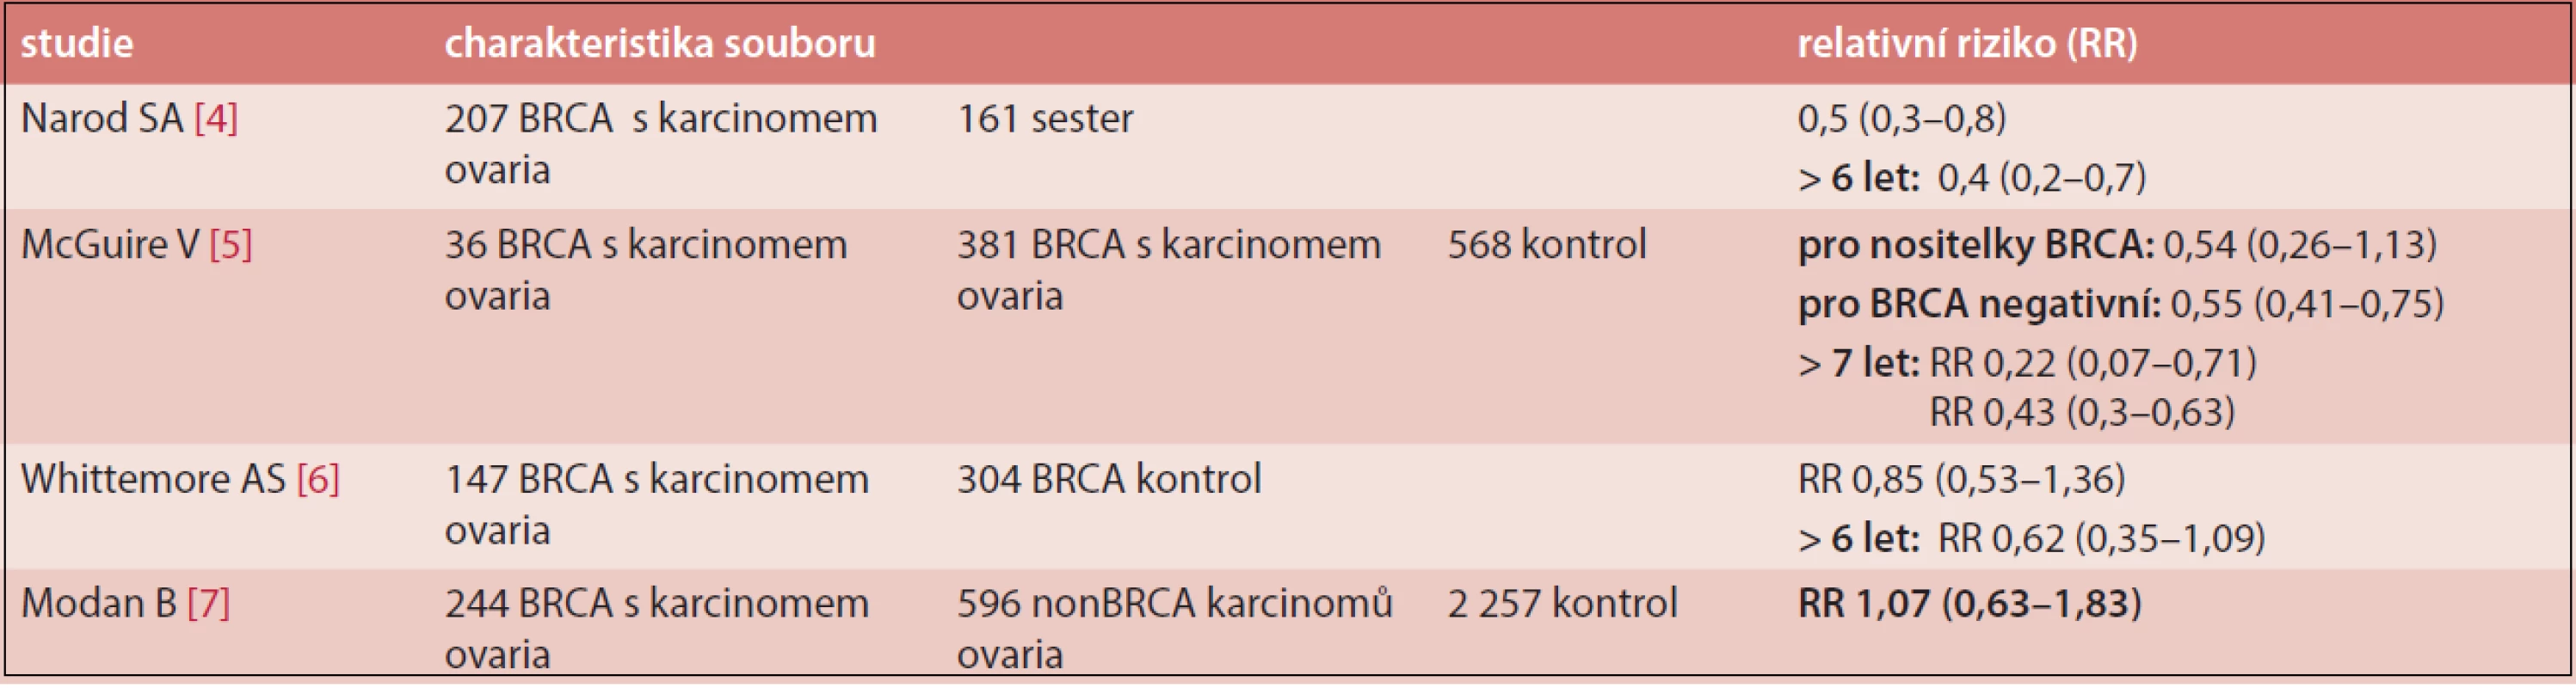 Vliv CC na riziko karcinomu ovaria u nositelek mutace BRCA